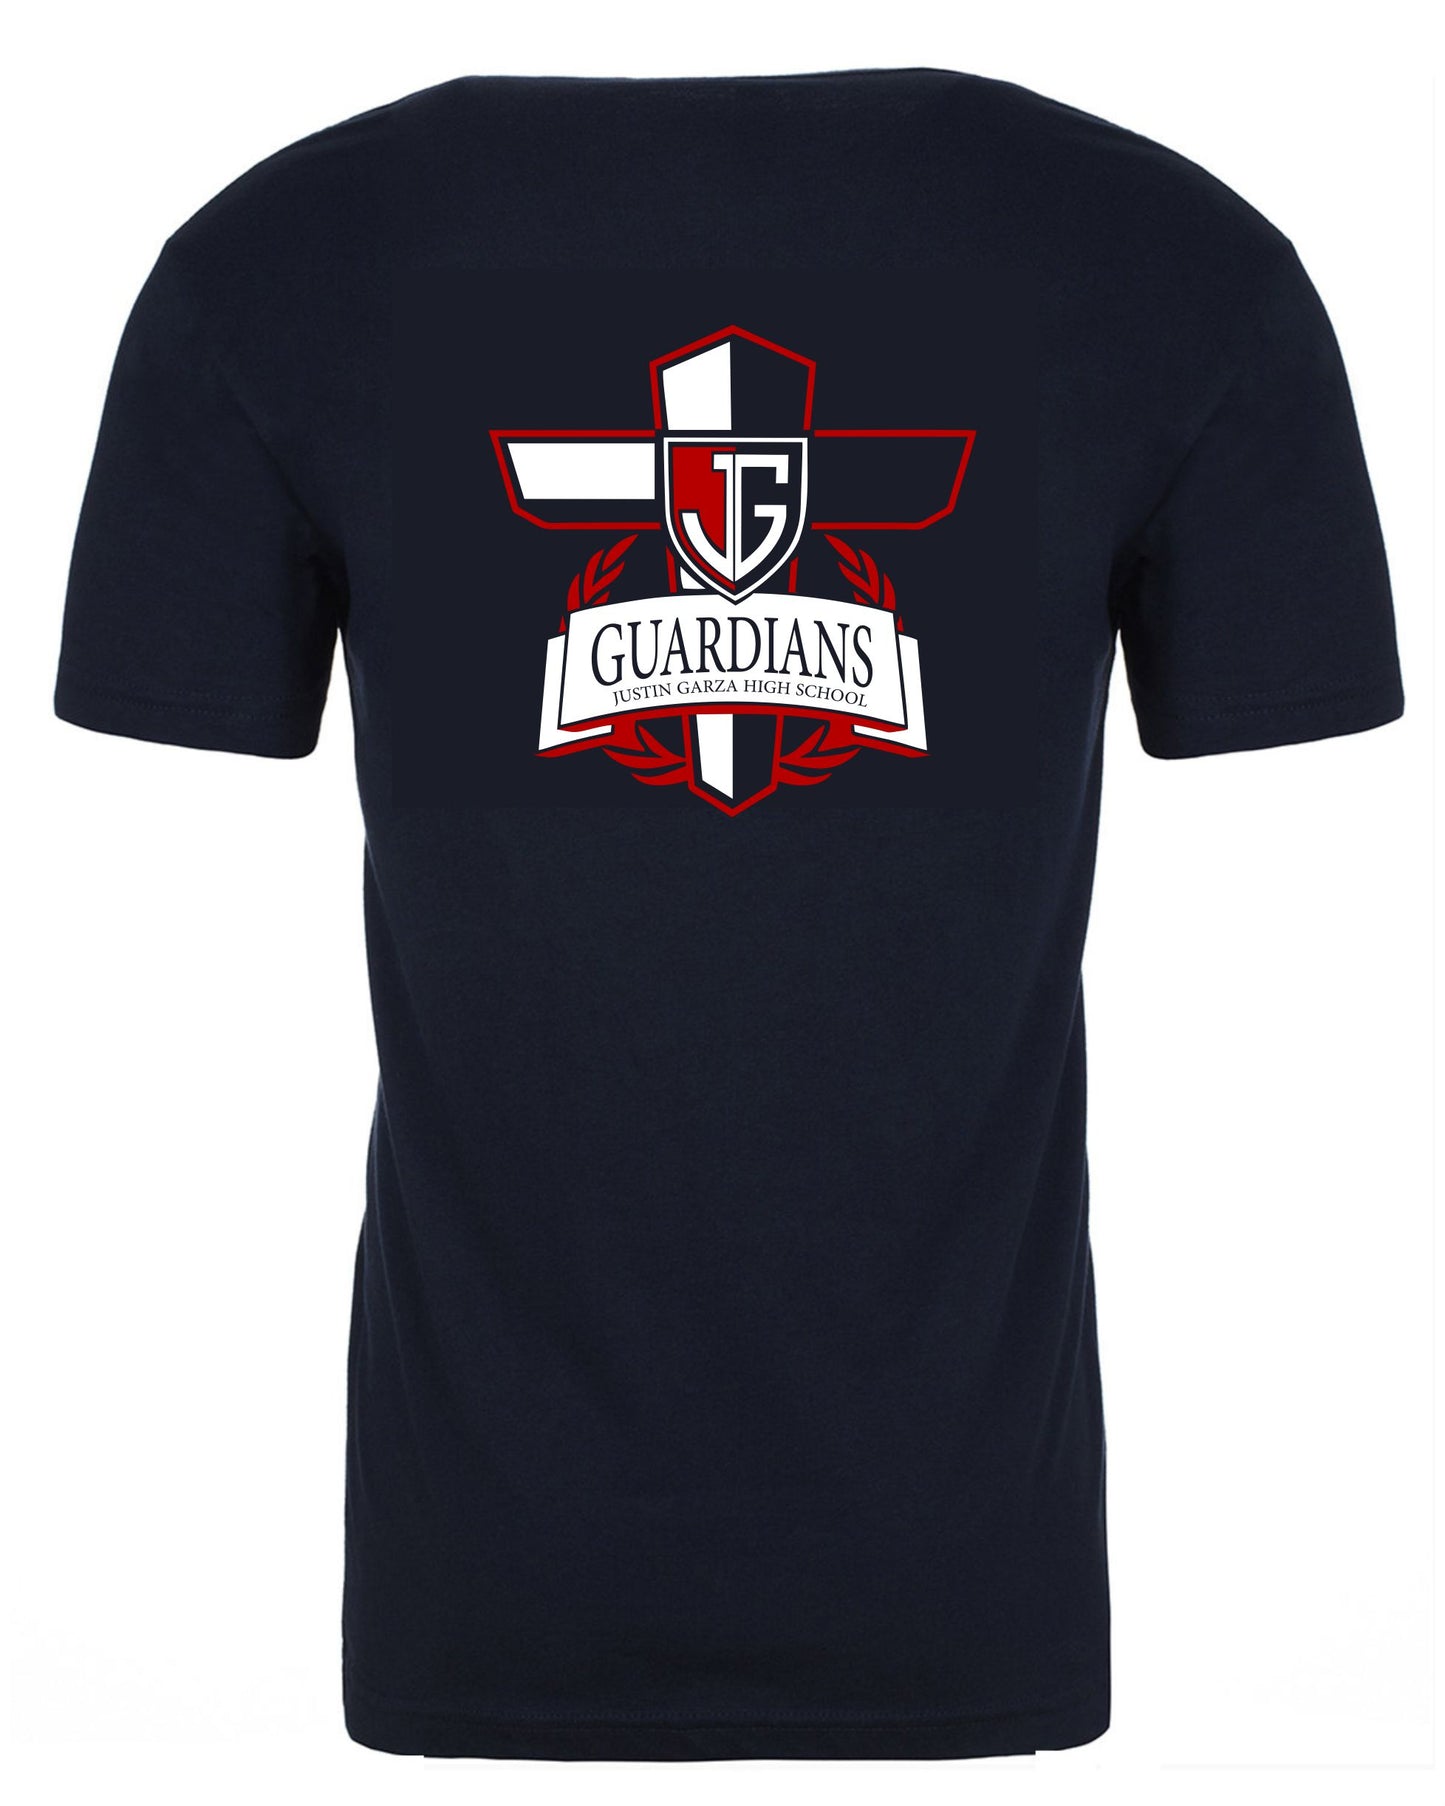 Justin Garza Christian Athletes Fellowship T-Shirt